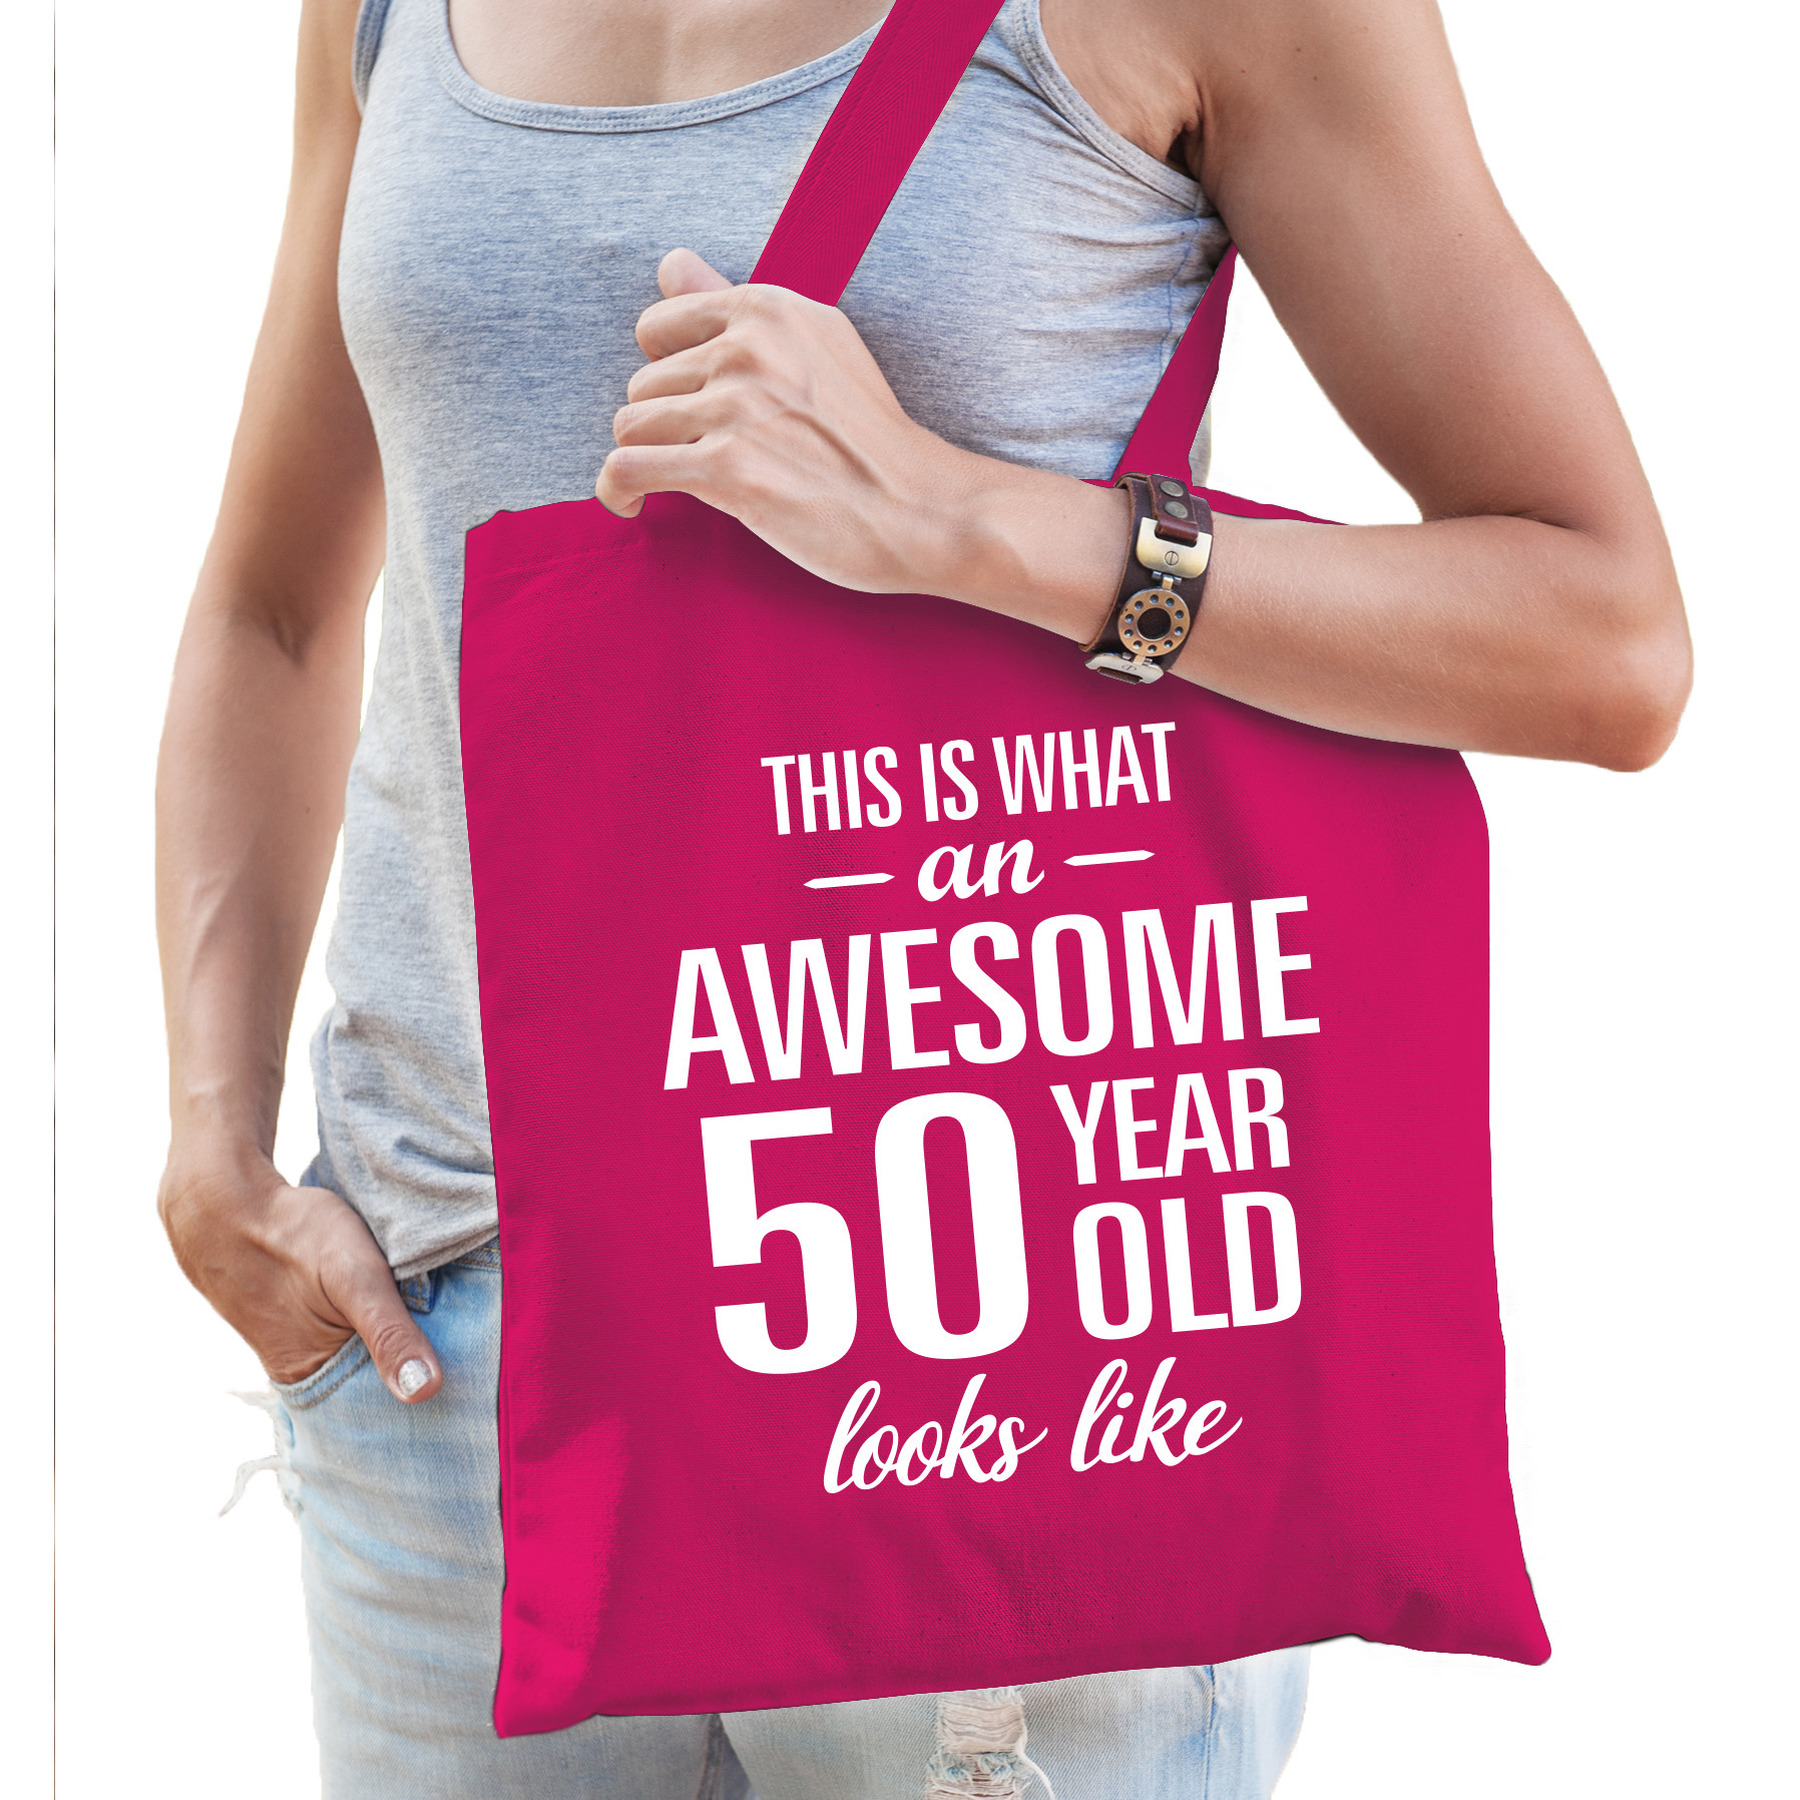 Awesome 50 year / geweldig 50 jaar cadeau tas roze voor dames